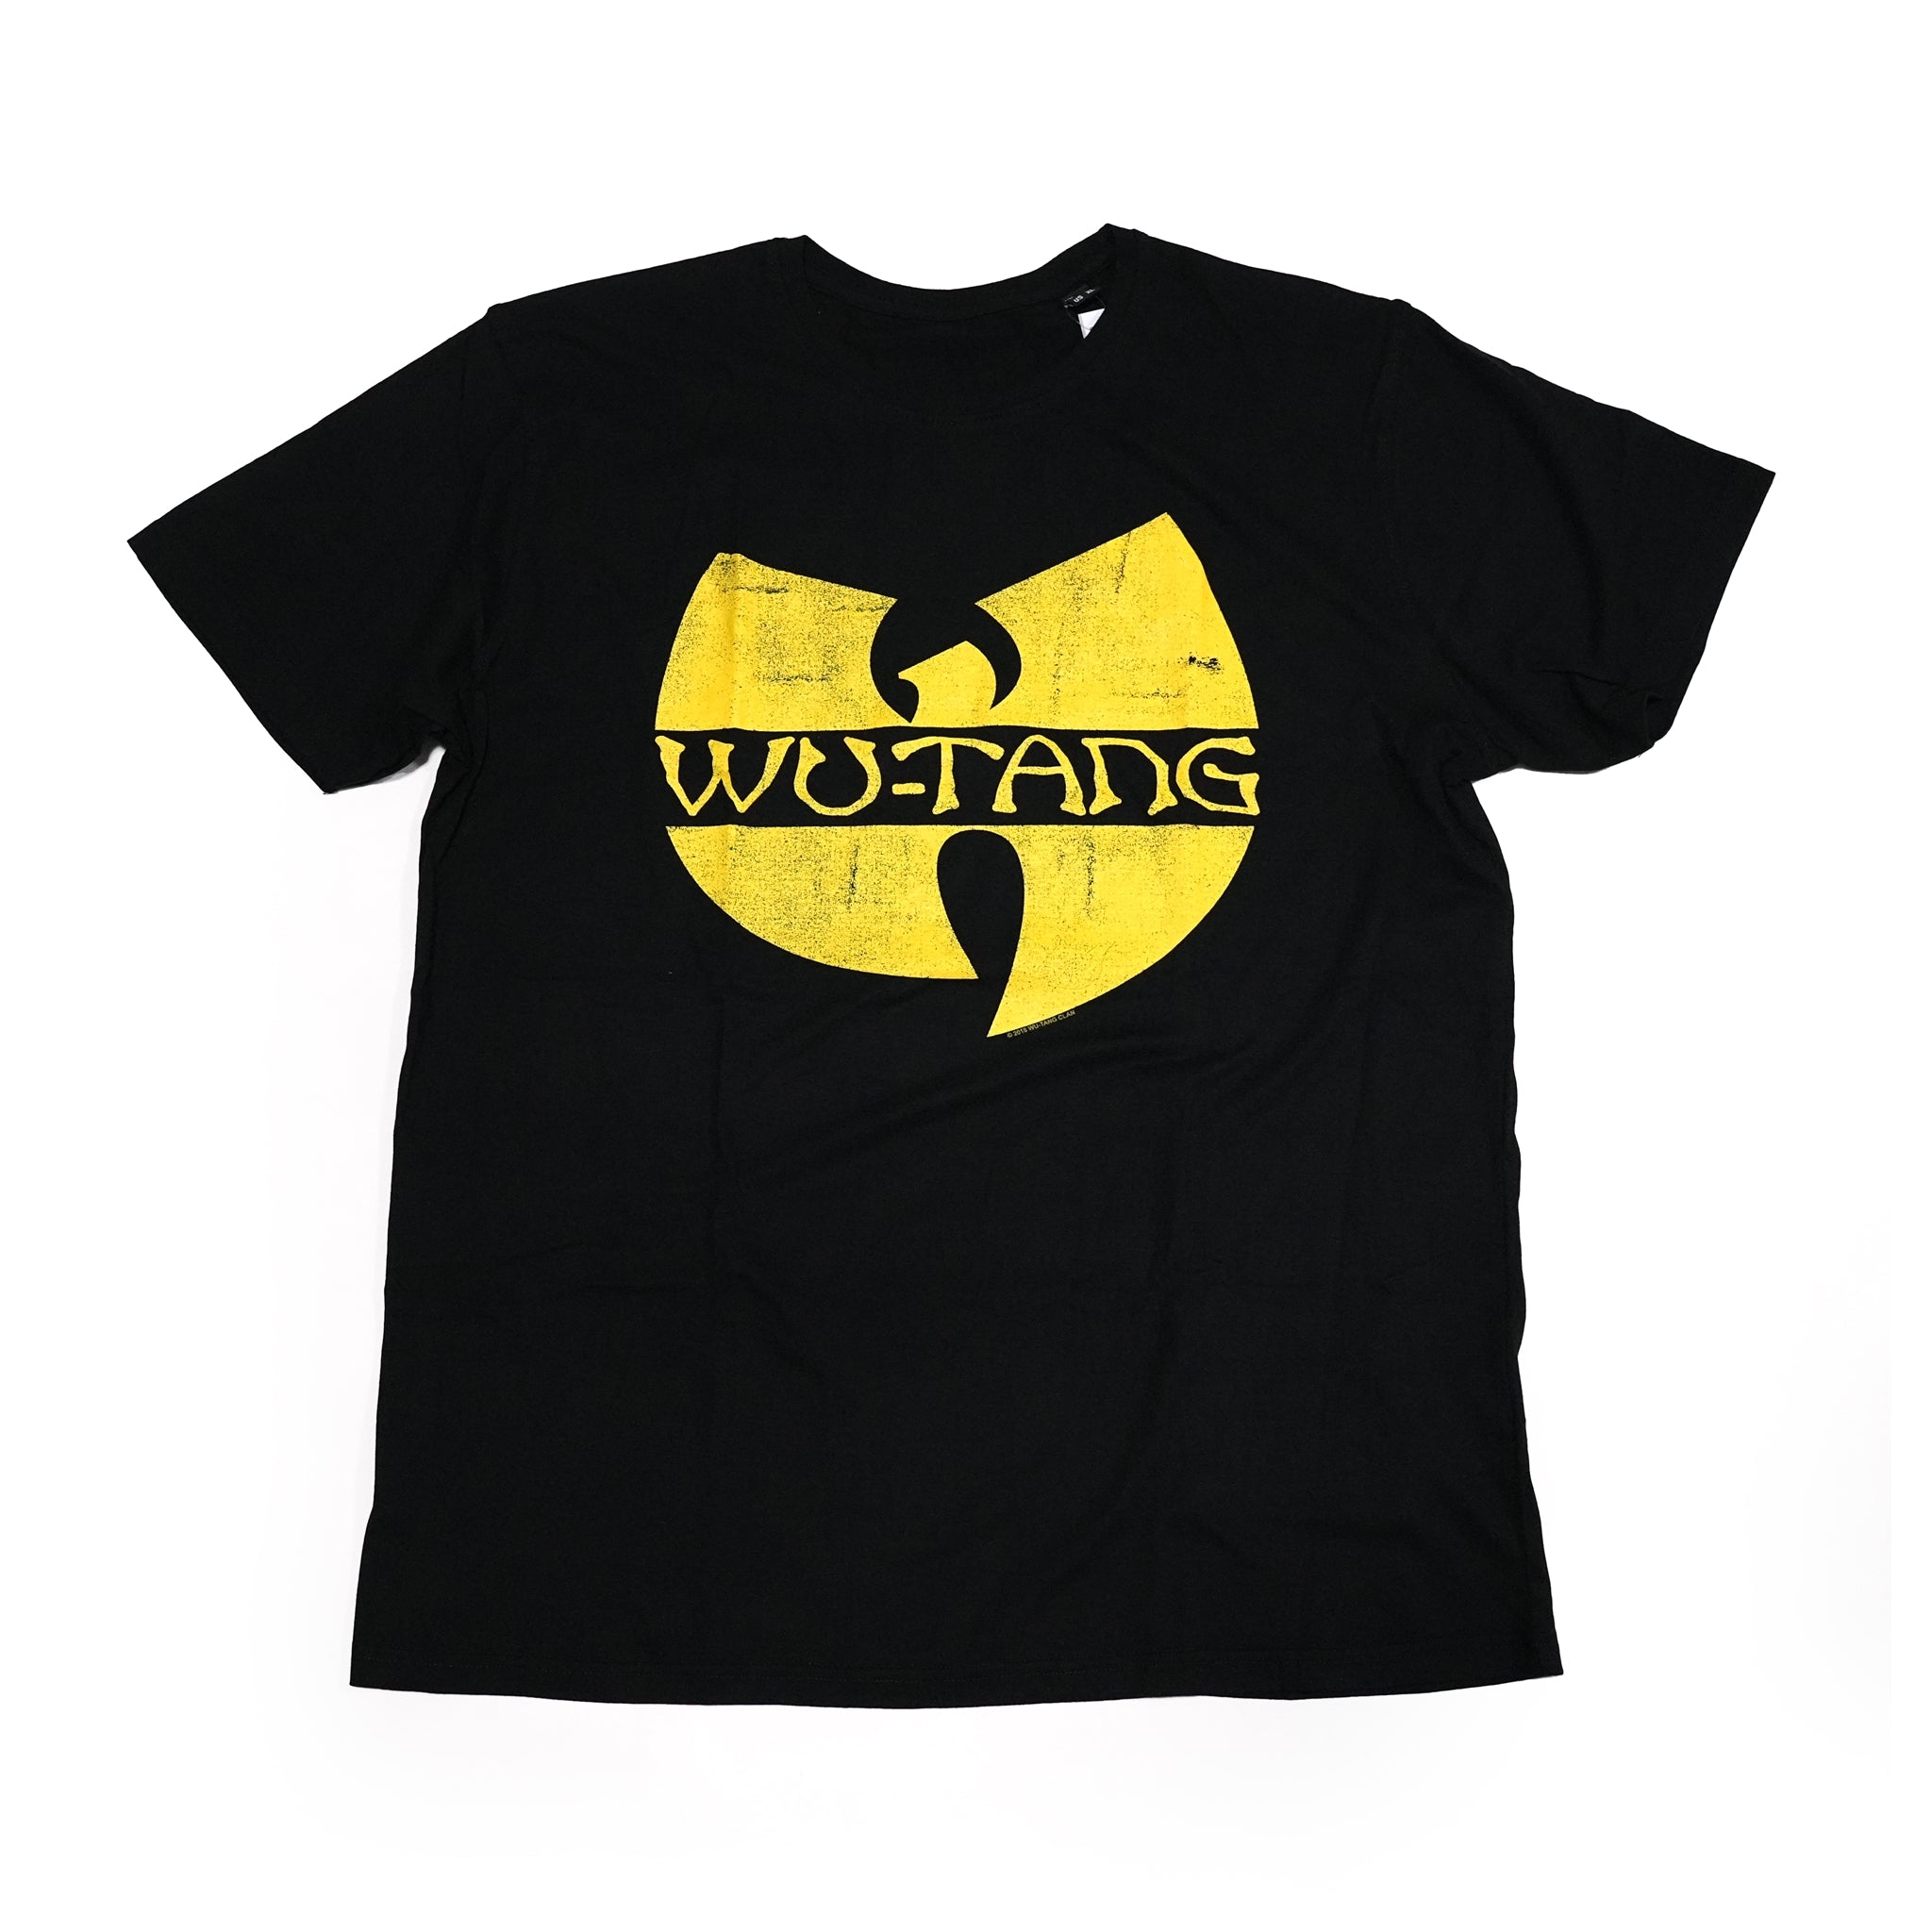 Name:WuTangClan_Logo_Unisex_Black【ROCK OFF】【ネコポス選択可能】